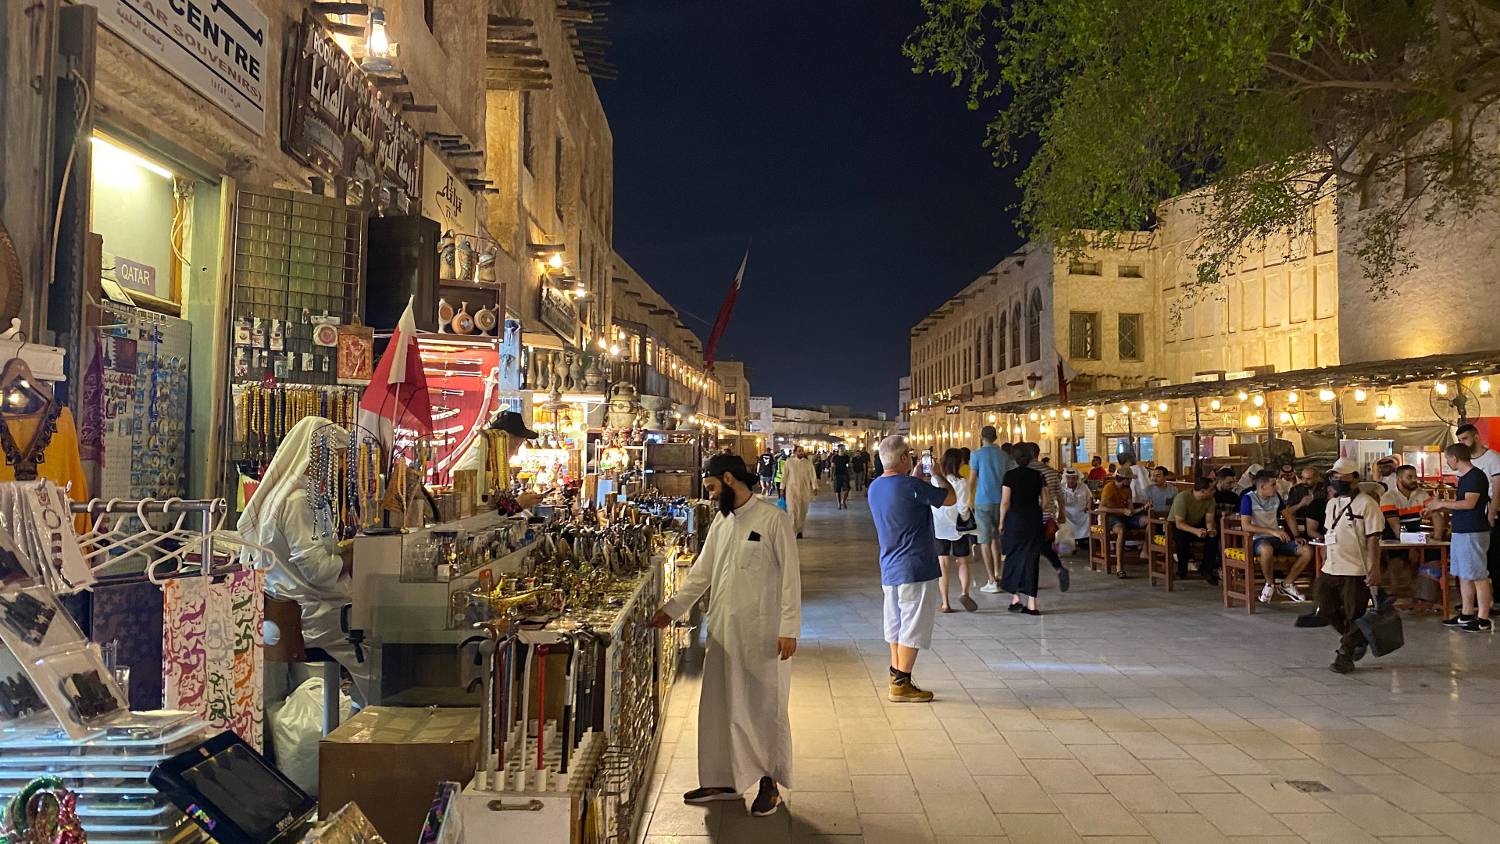 The rebuilt souq offers shoppers a taste of a traditional Qatari shopping area (Karim Jaffar/AFP)